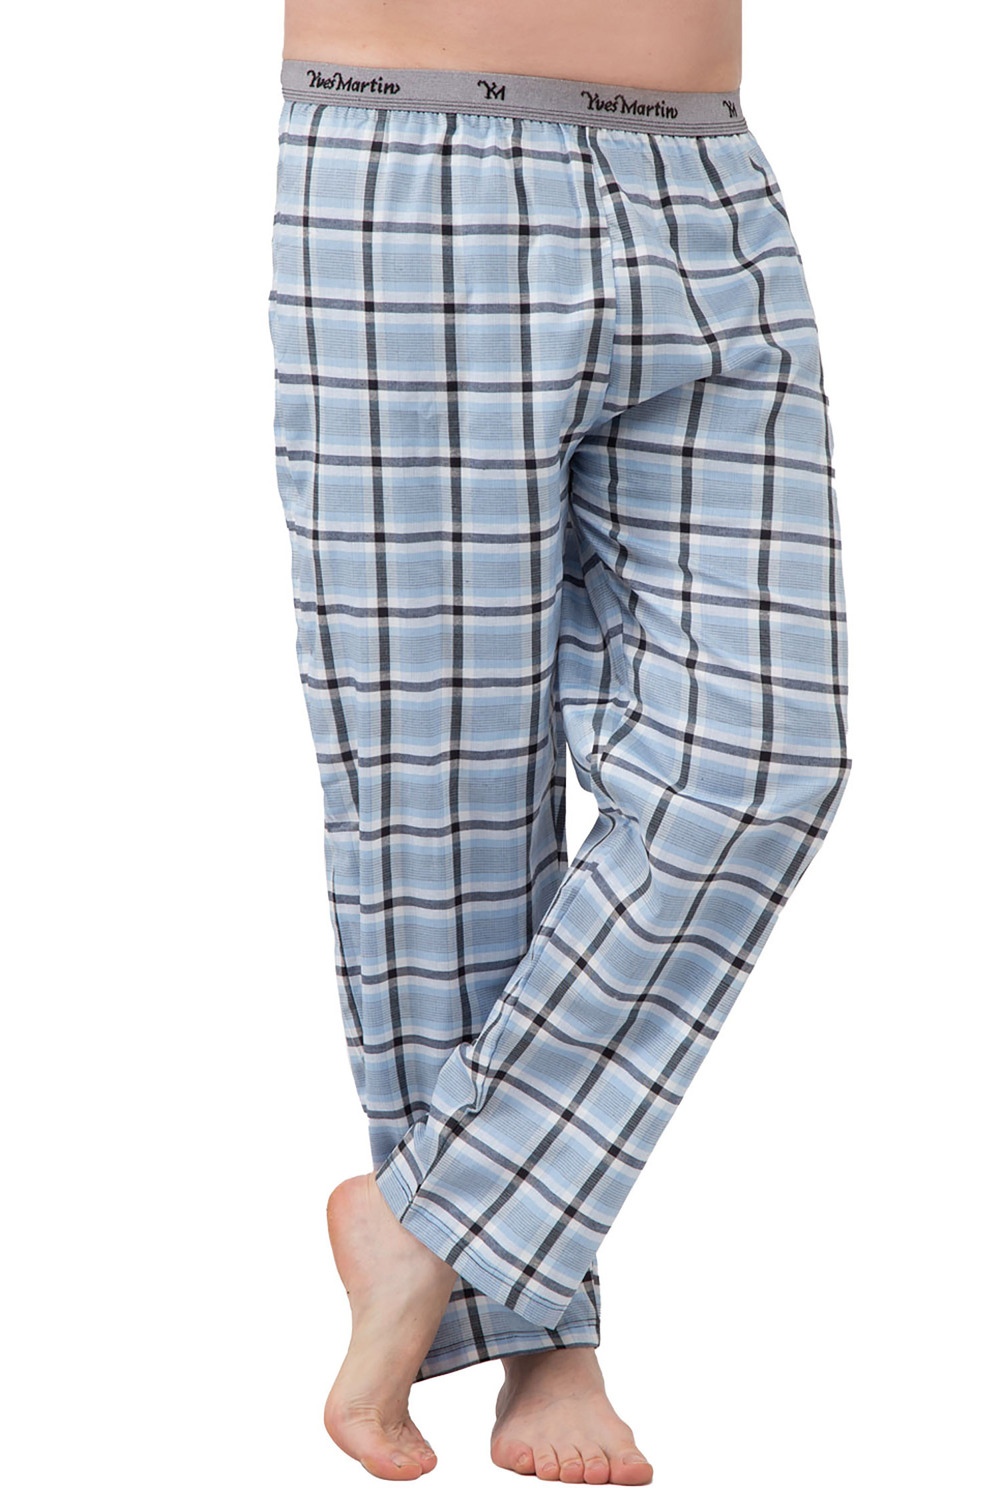 Yves Martin - Men's flannel sleep pants, blue plaid, extra large (XL)